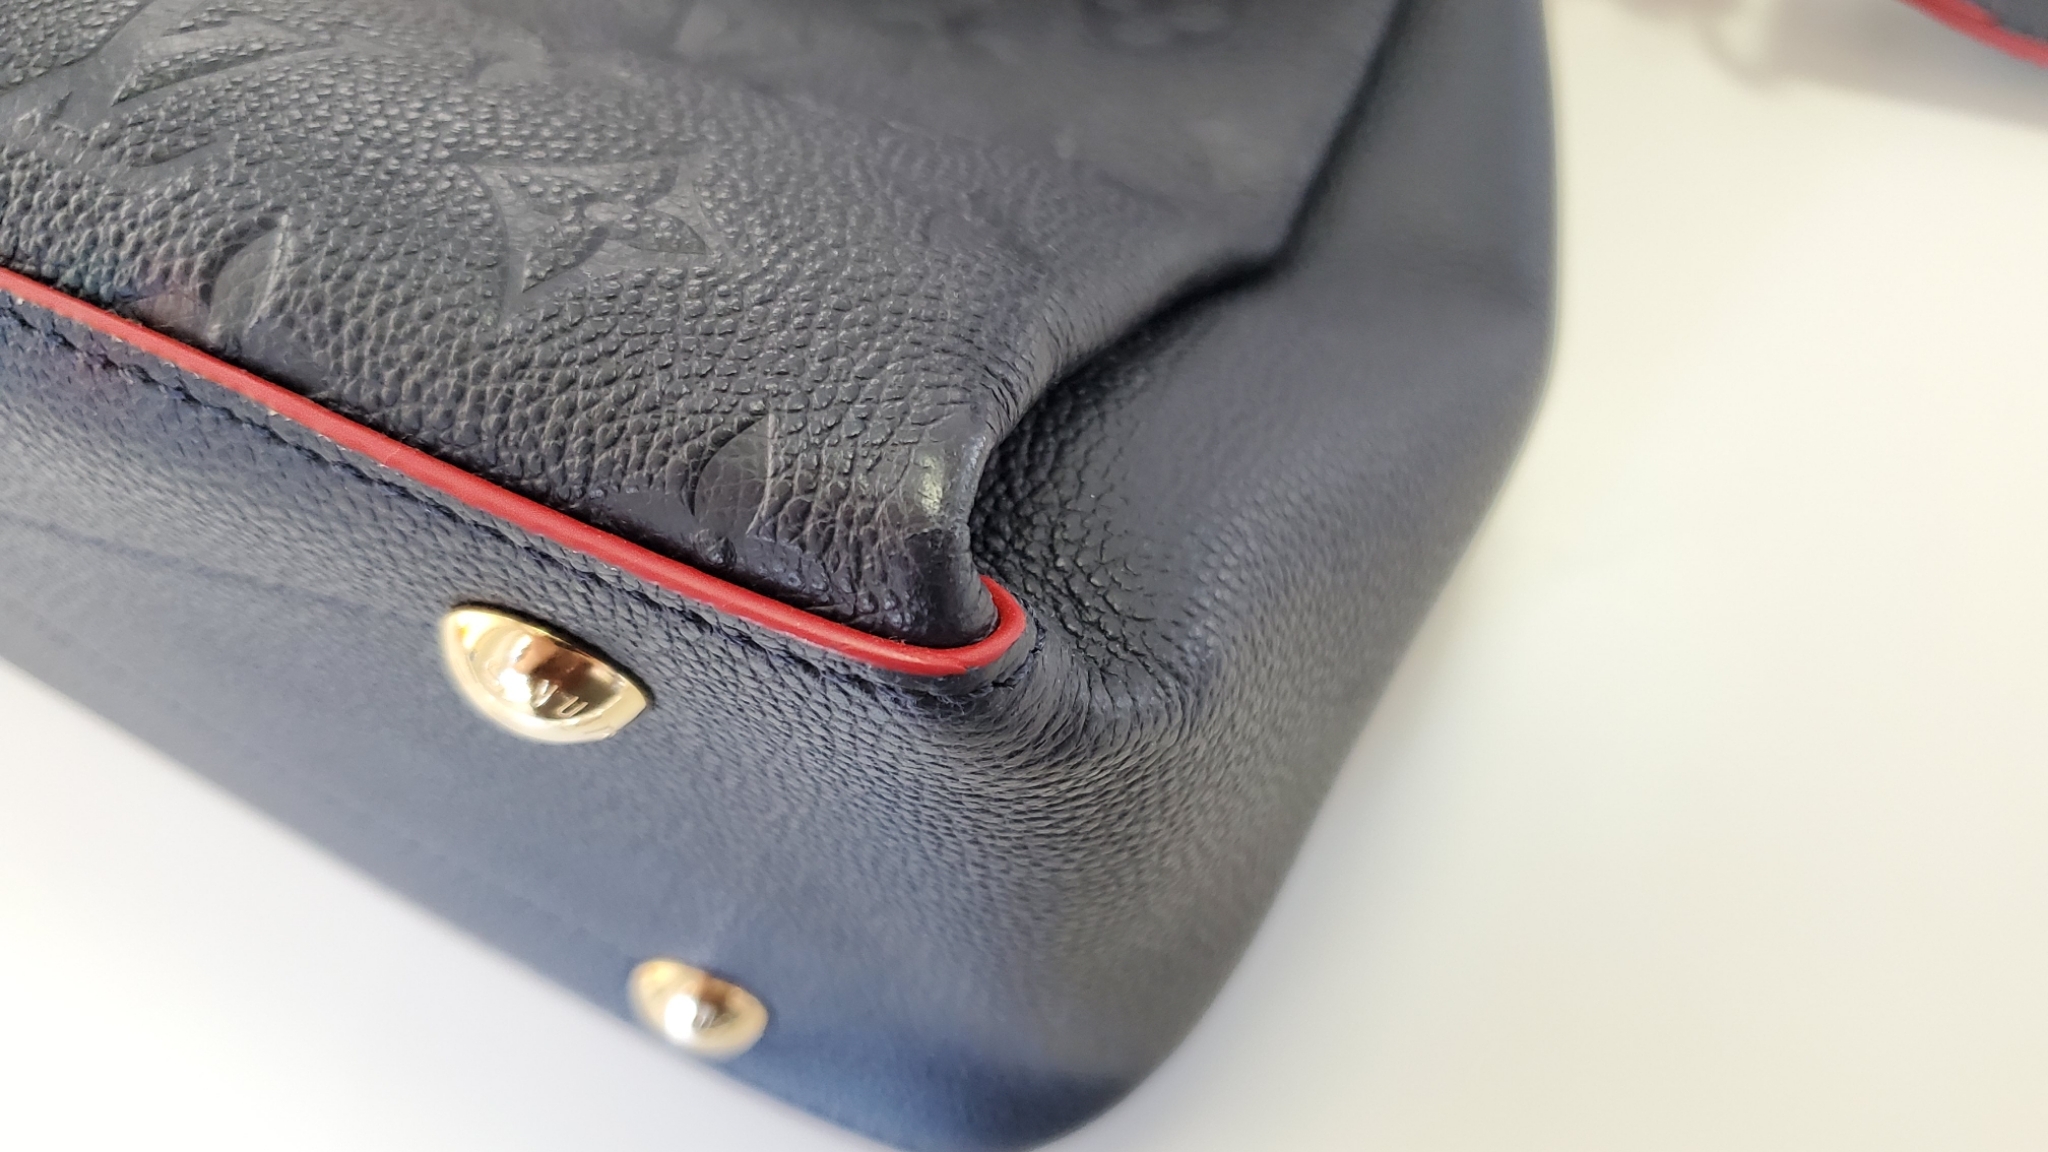 Louis Vuitton Black Monogram Empreinte Leather George MM Bag – Italy Station